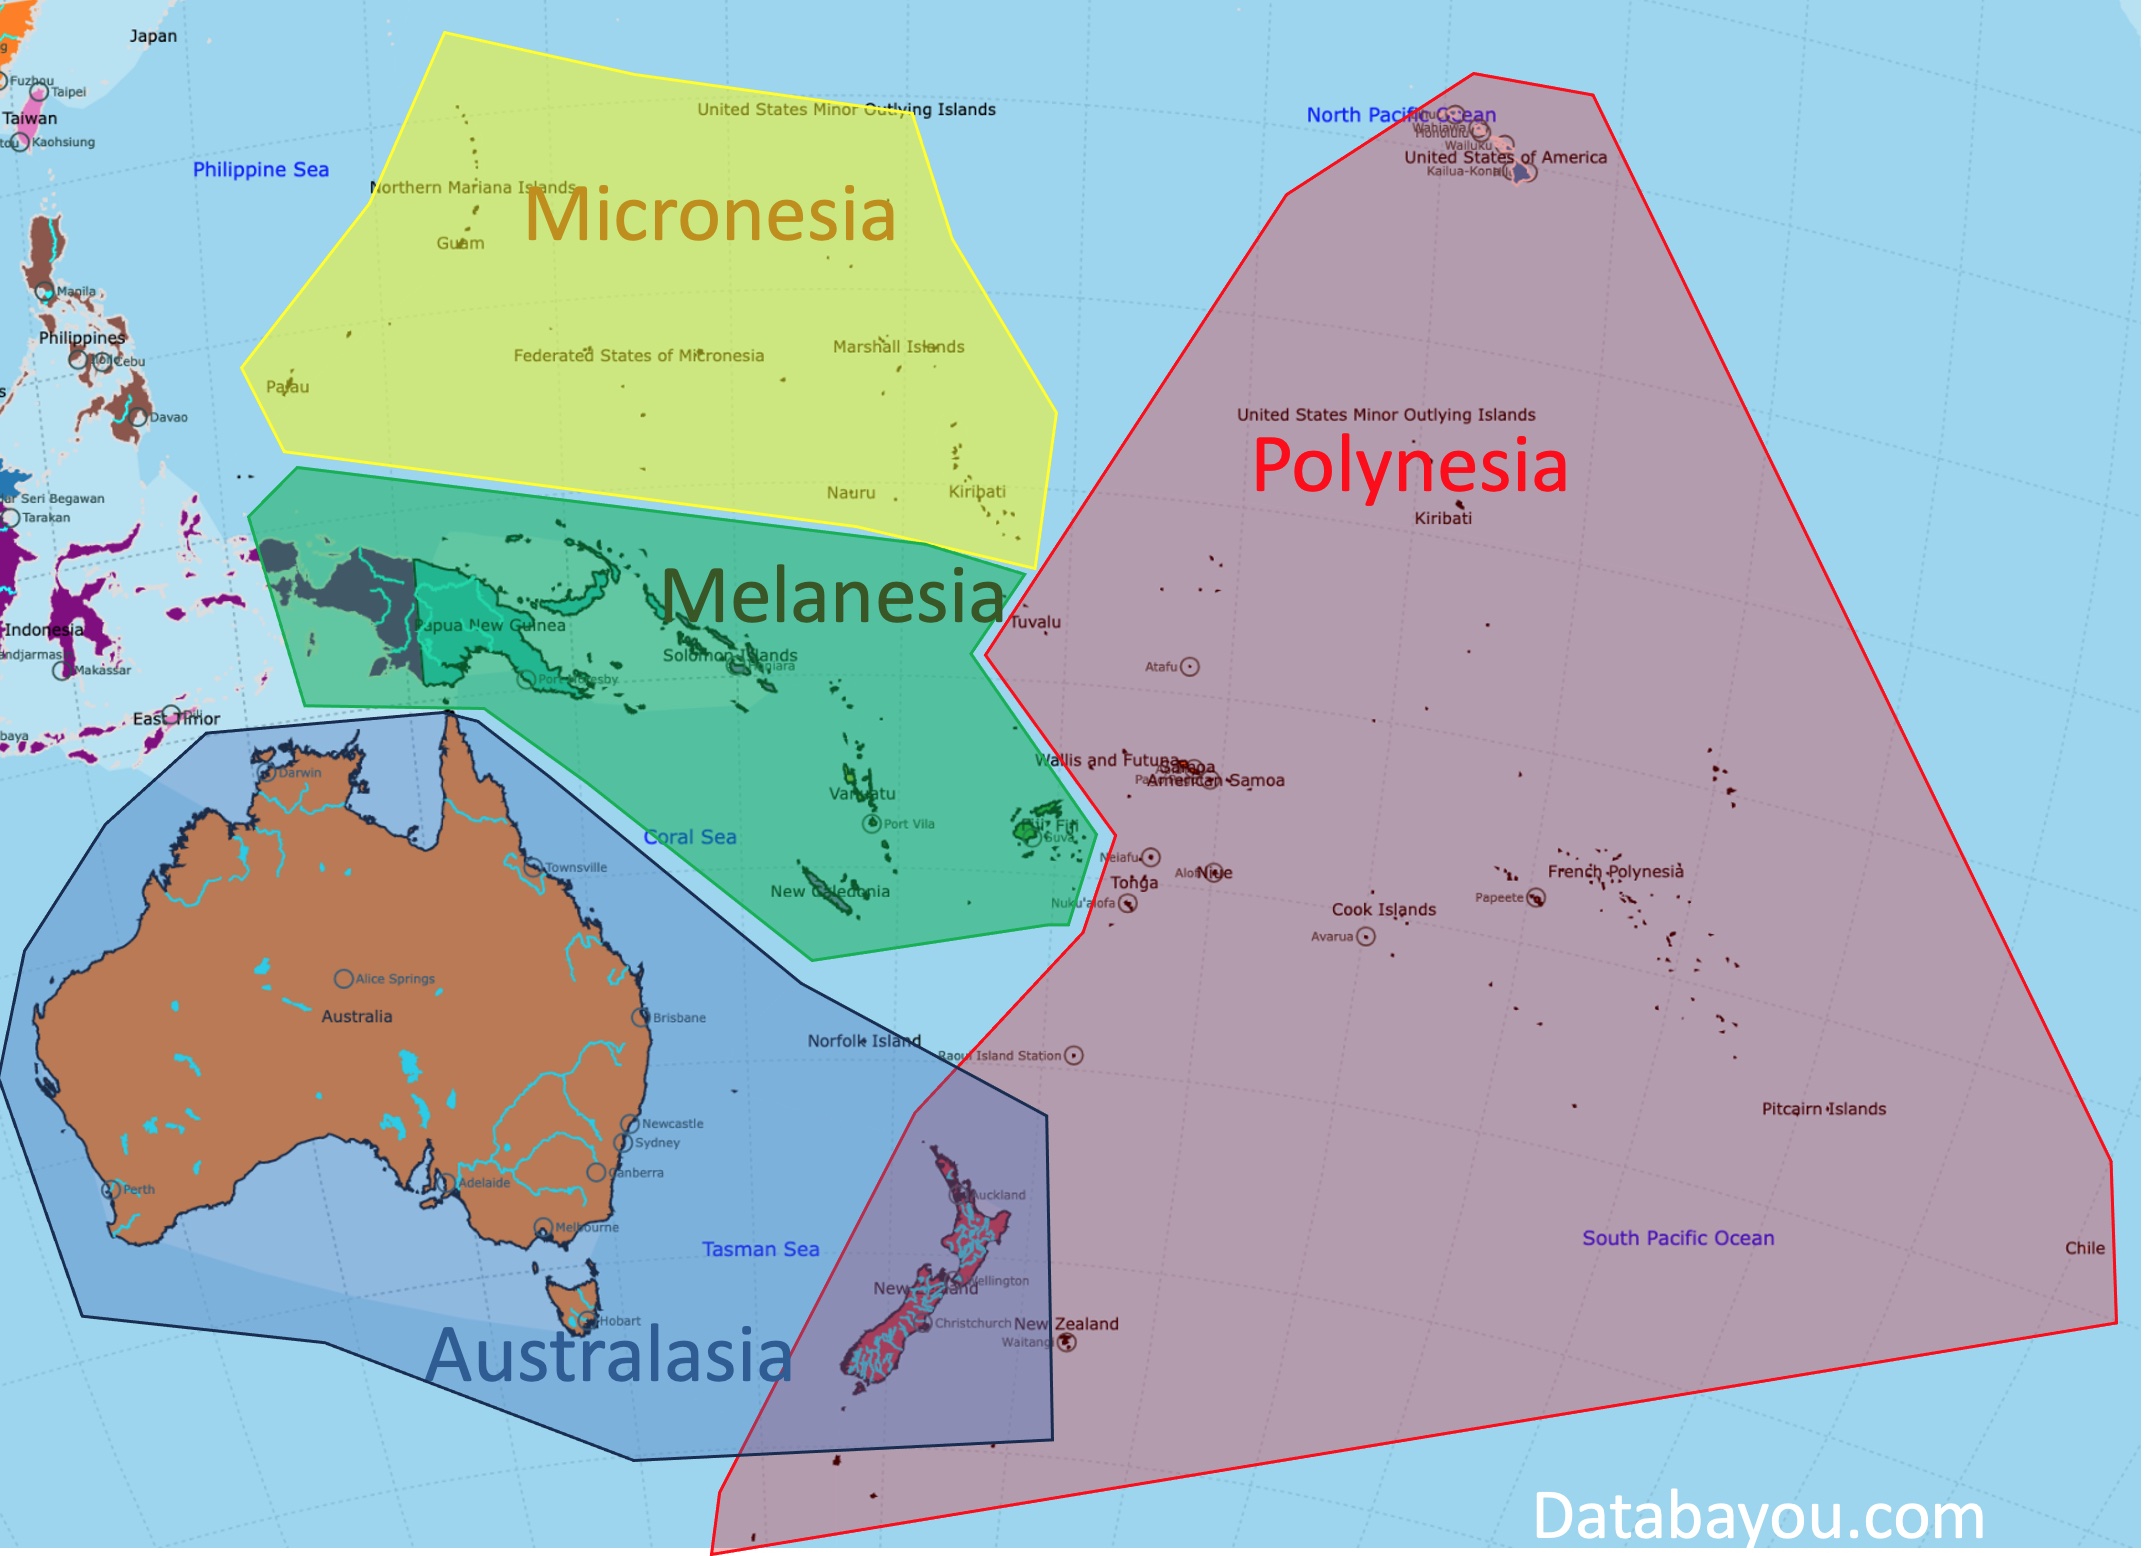 Map of Oceania's Regions: Australasia, Polynesia, Micronesia, and Malanesia.